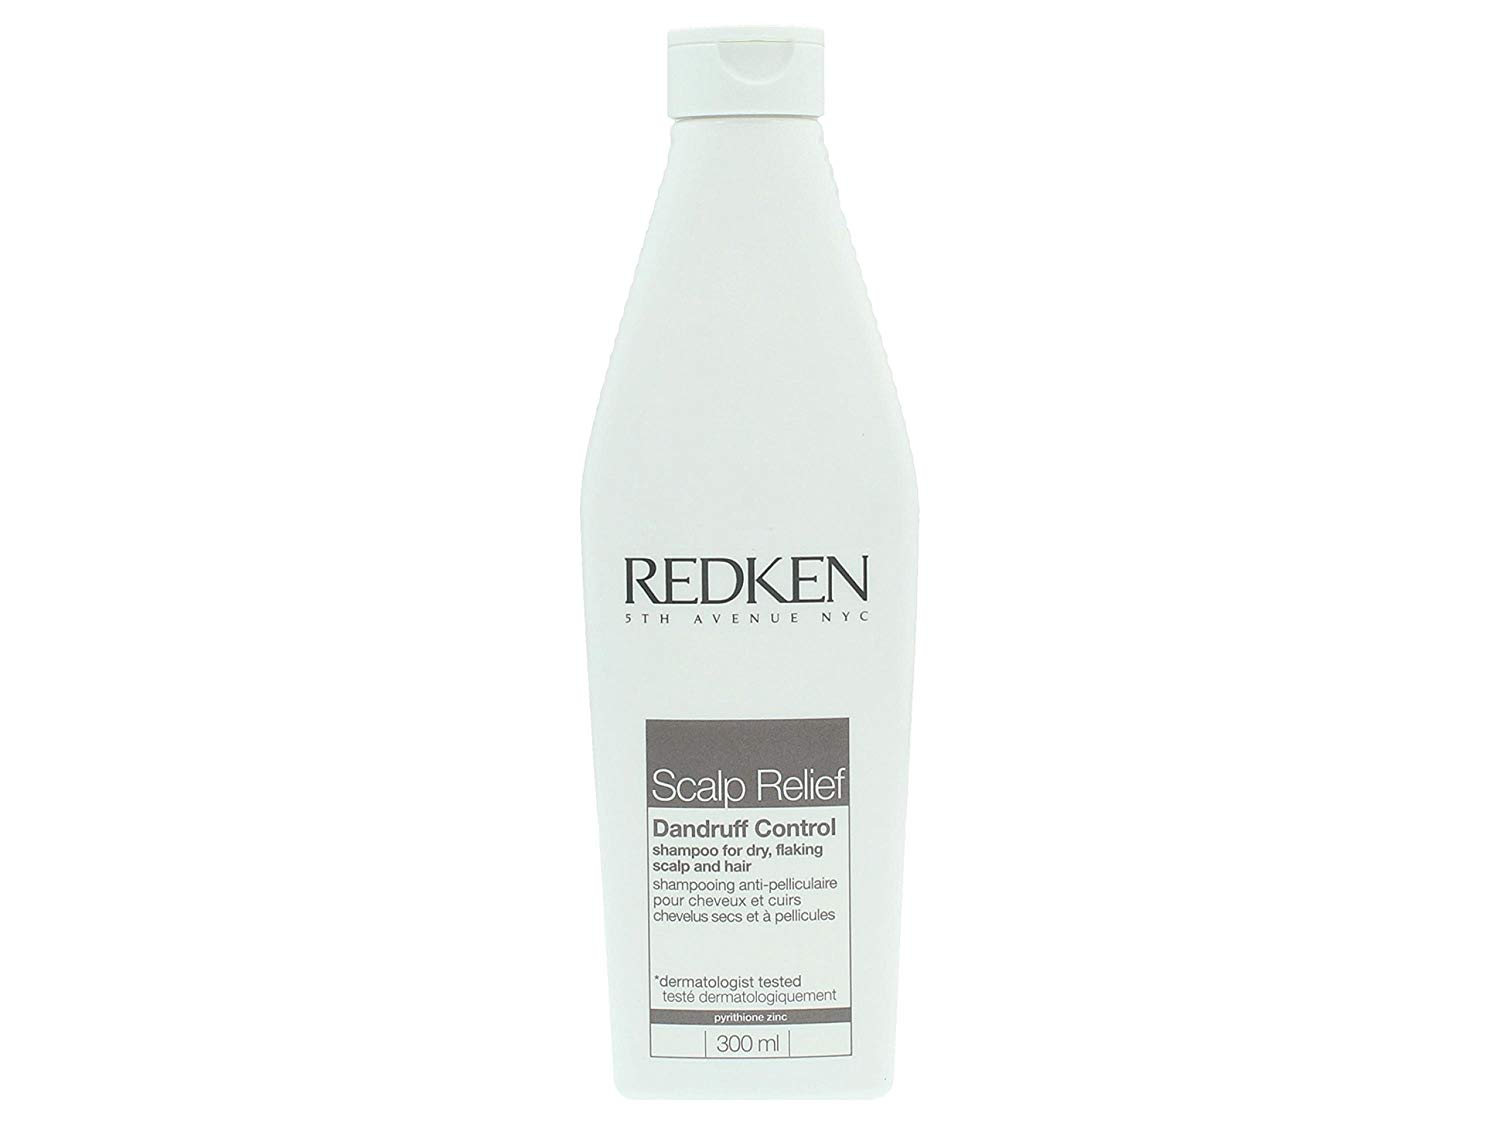 Redken Scalp Relief Dandruff Control Shampoo Reviews